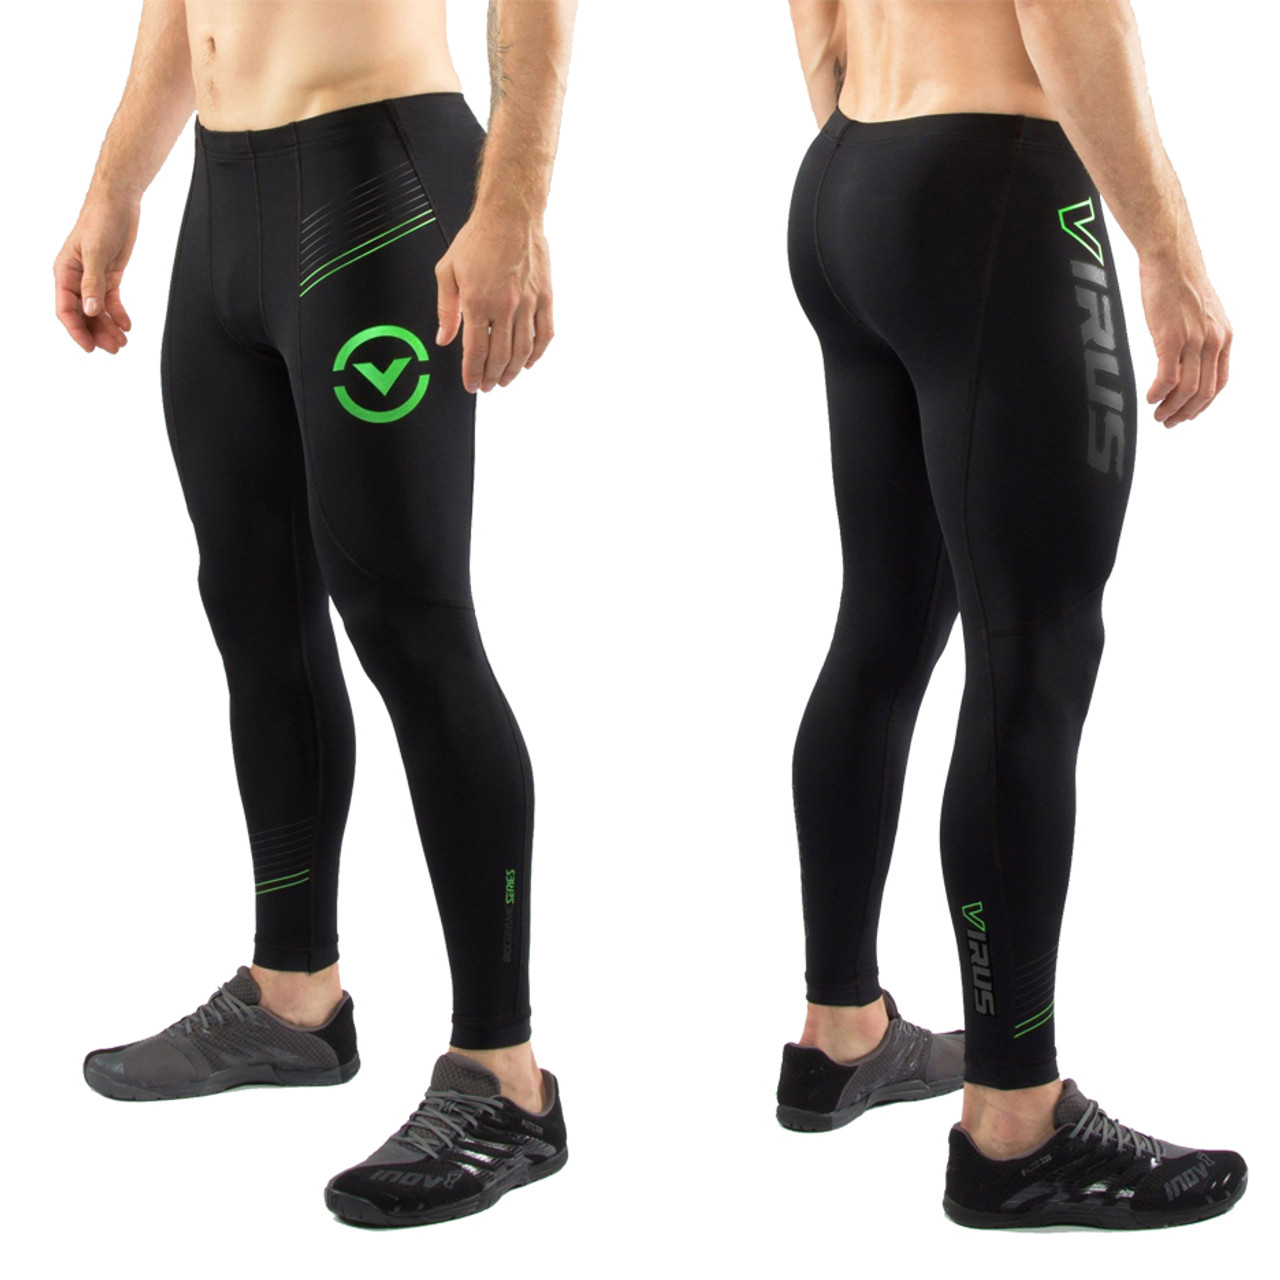 VIRUS on X: EAU7, @virusintl Women's #bioceramic Compression Tech Pants  are now back in stock.